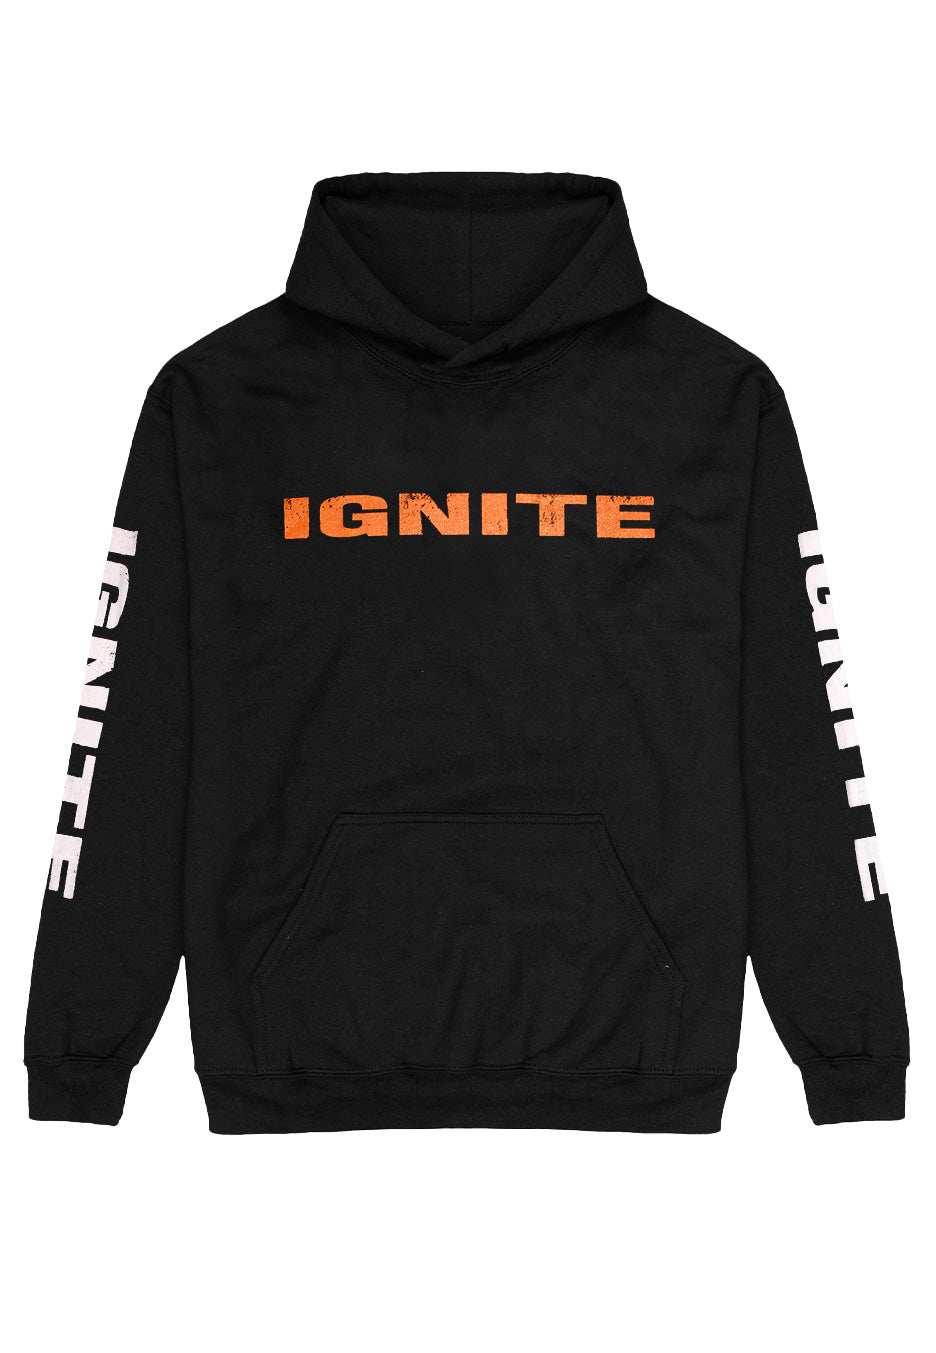 Ignite - OG - Hoodie